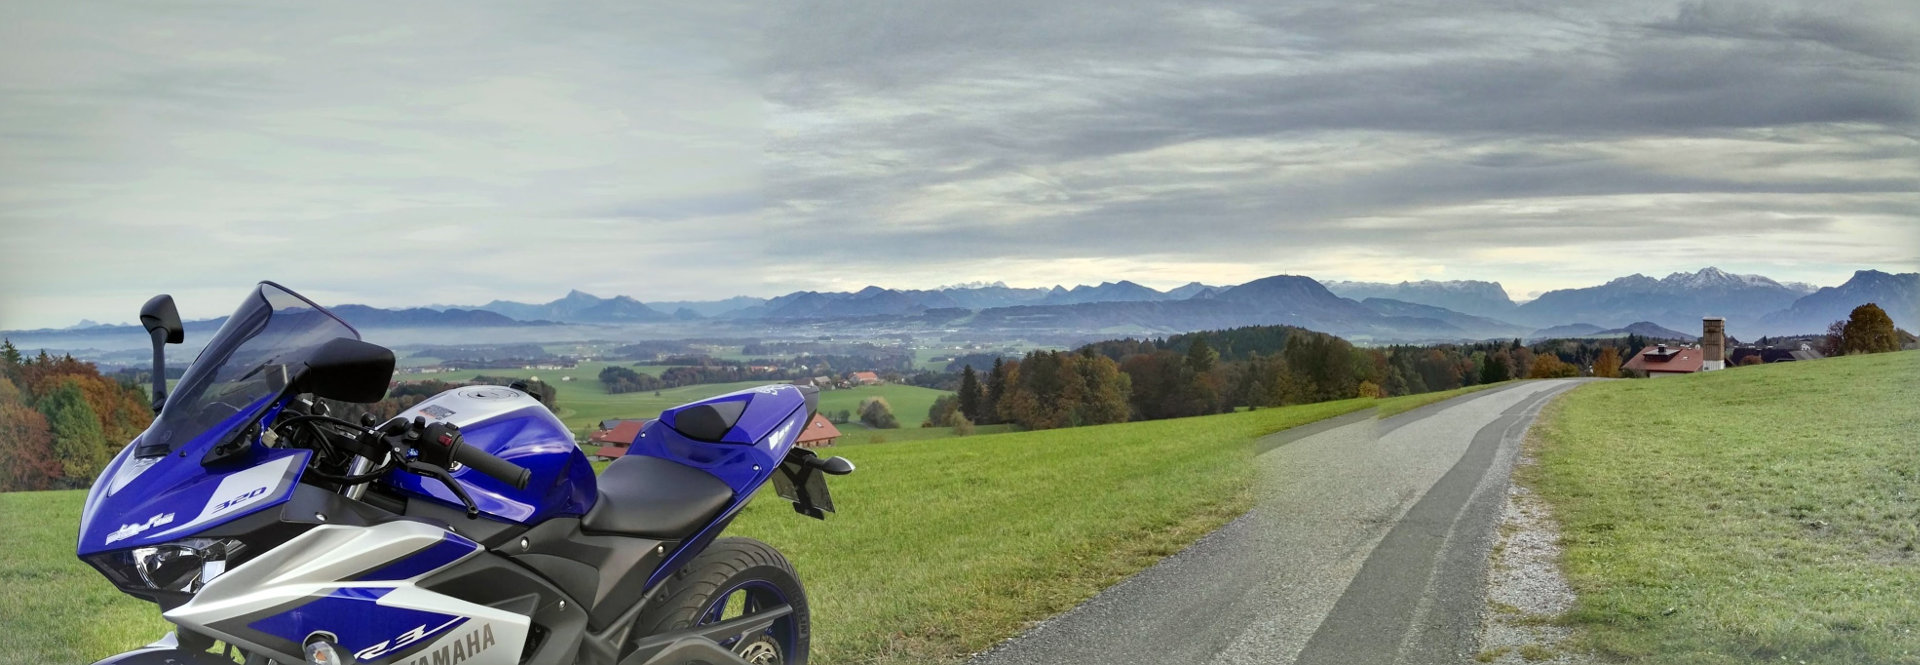 Haunsberg Panorama, Google Auto-Effekt